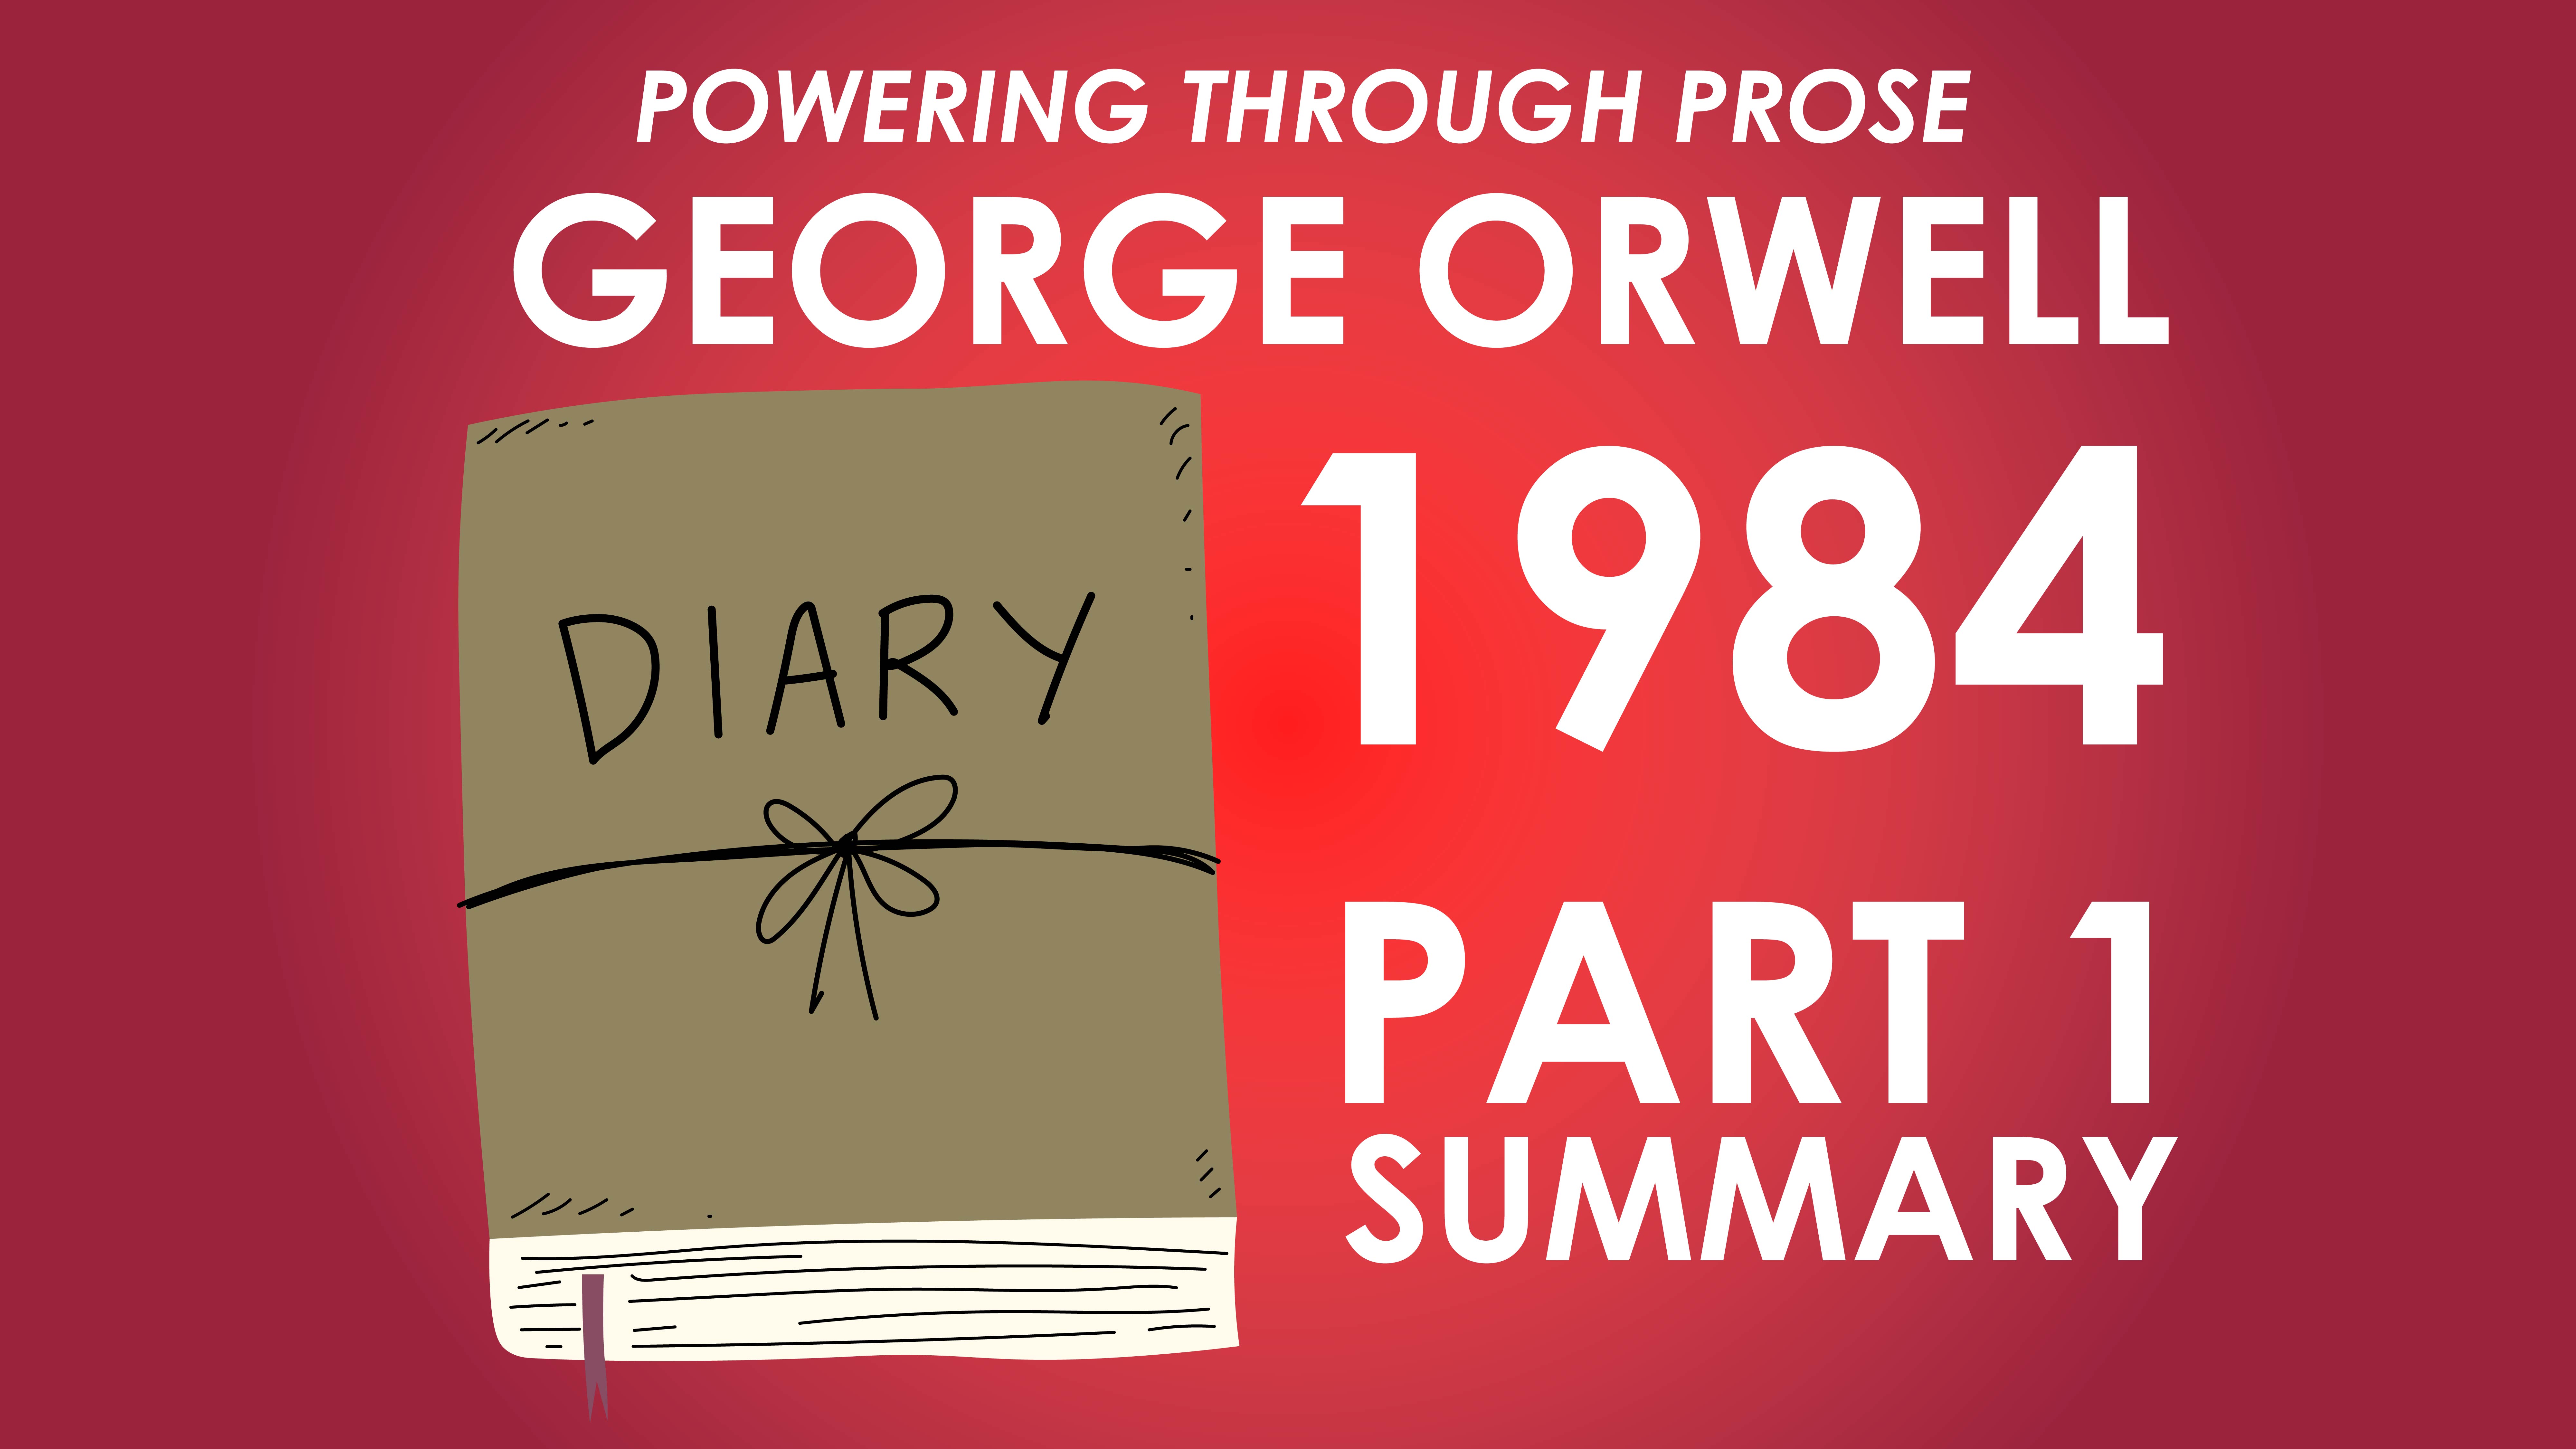 1984 - George Orwell - Part 1 Summary - Powering Through Prose Series